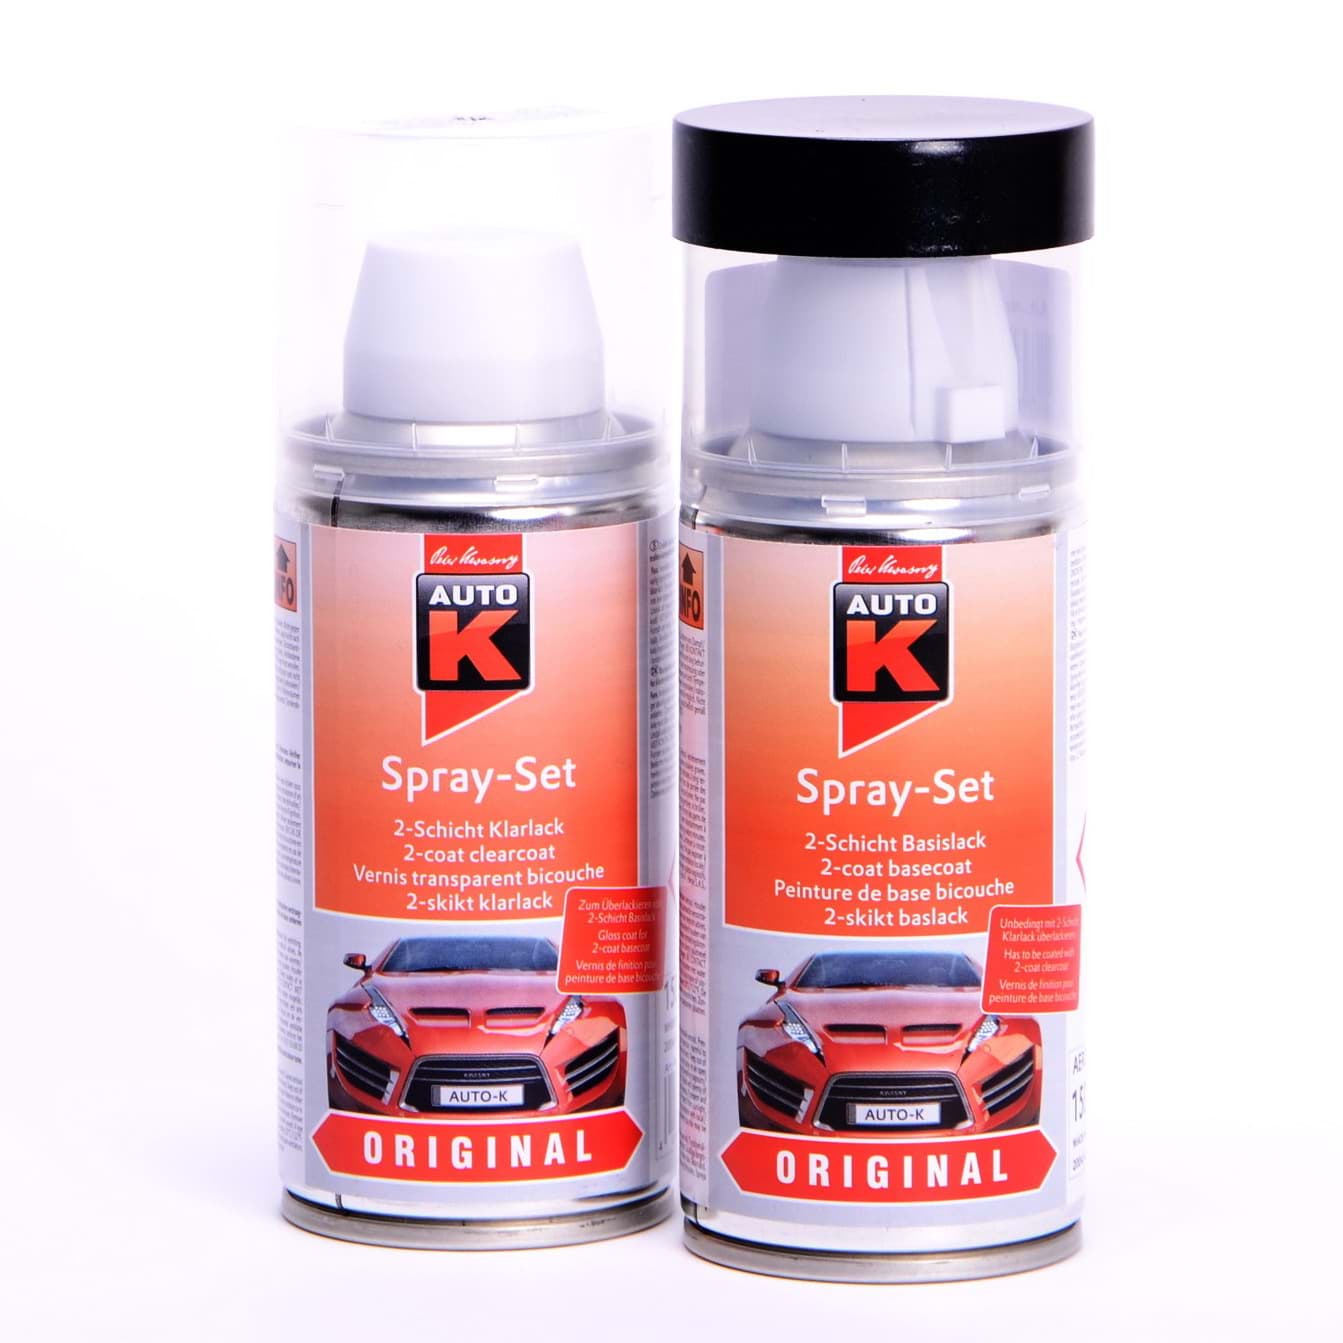 Afbeelding van Auto-K Spray-Set Autolack für Opel 272 Miamiblau 21365 